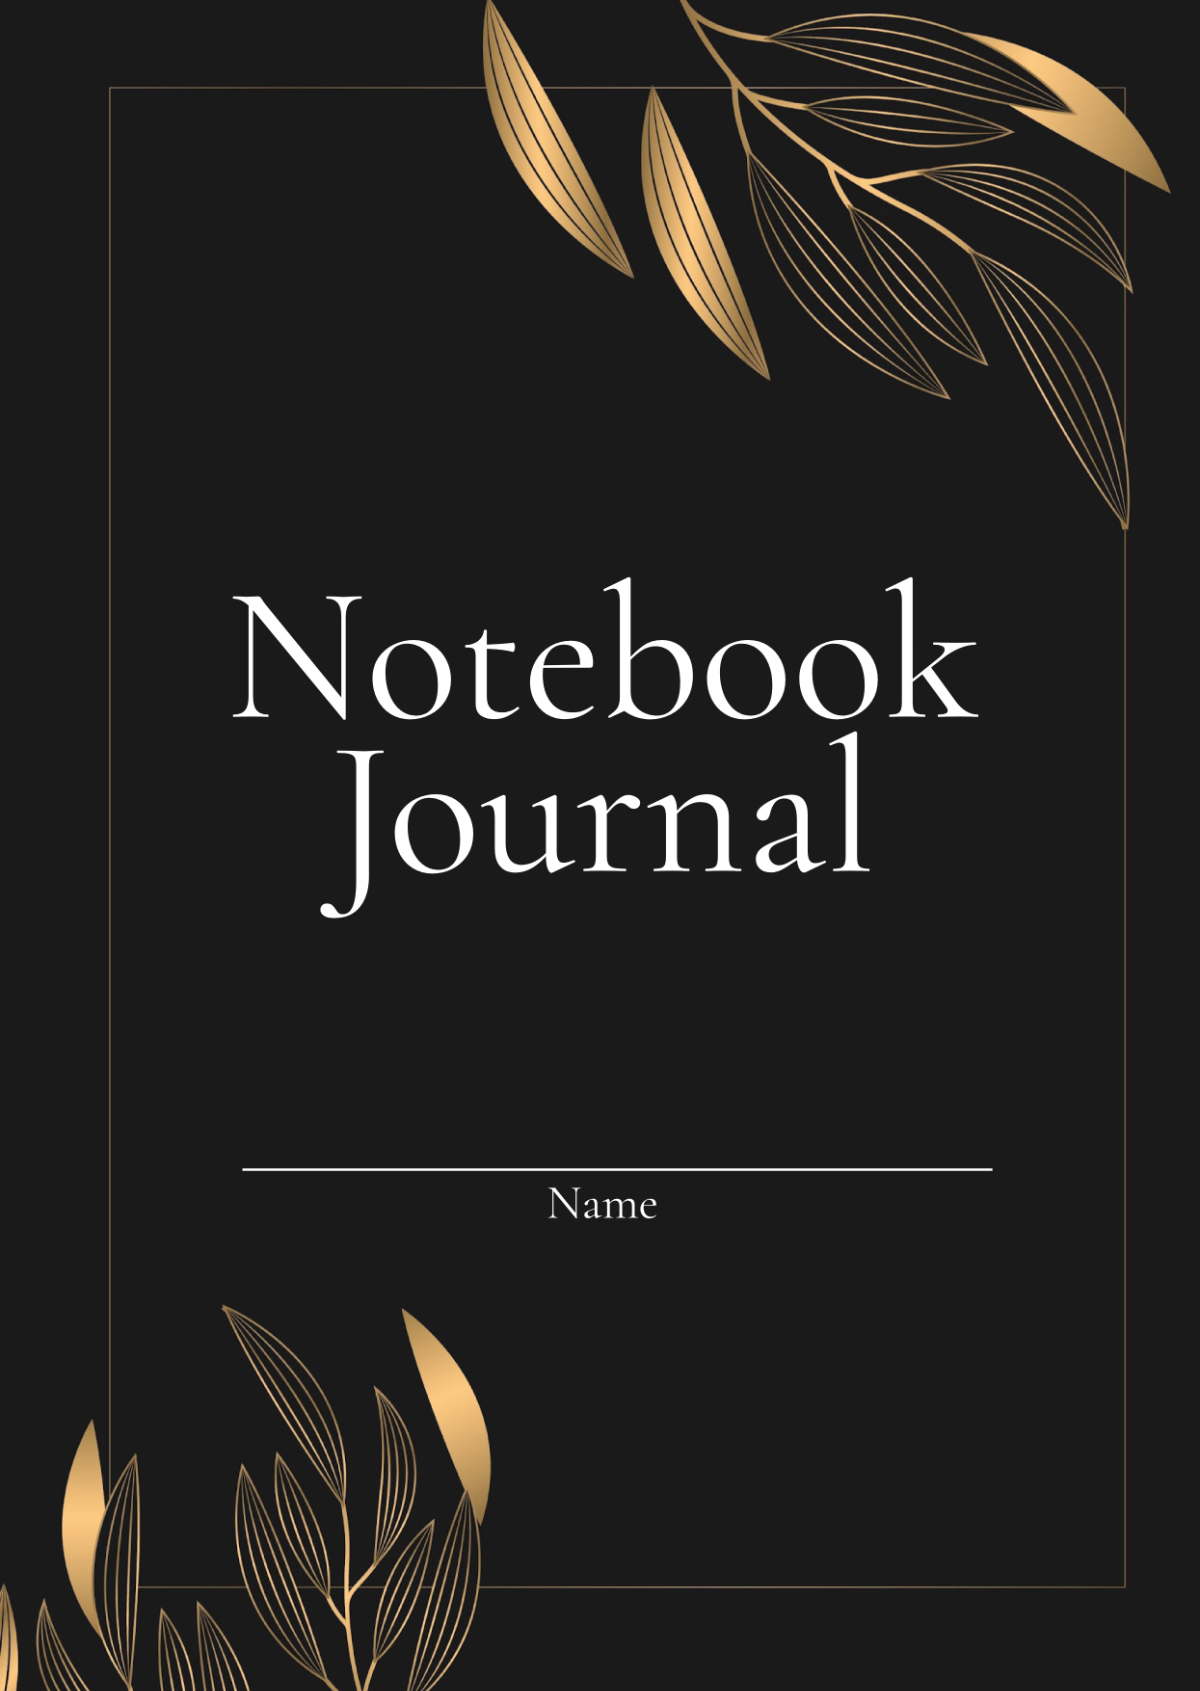 Elegant Notebook Journals Template